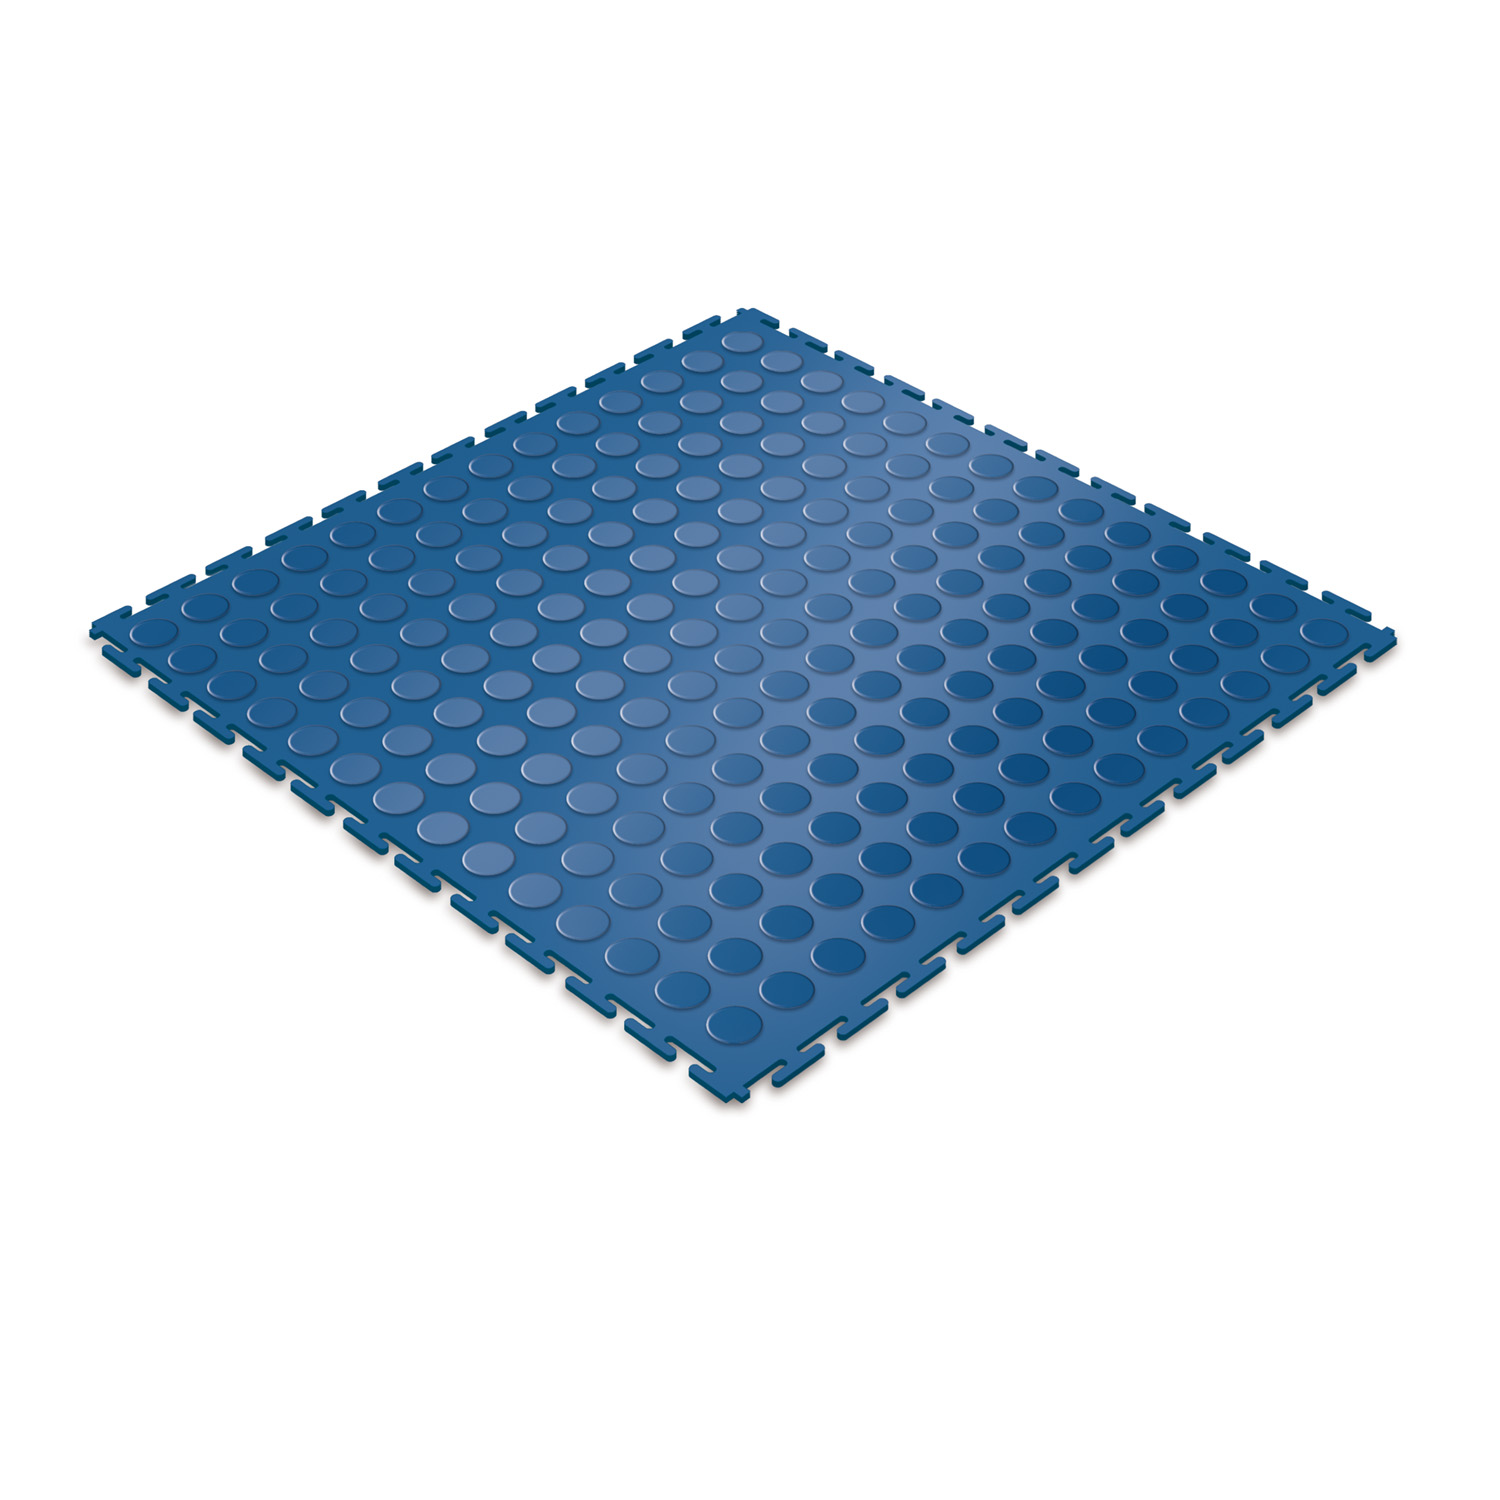 Standard floor tile (blue/studded)